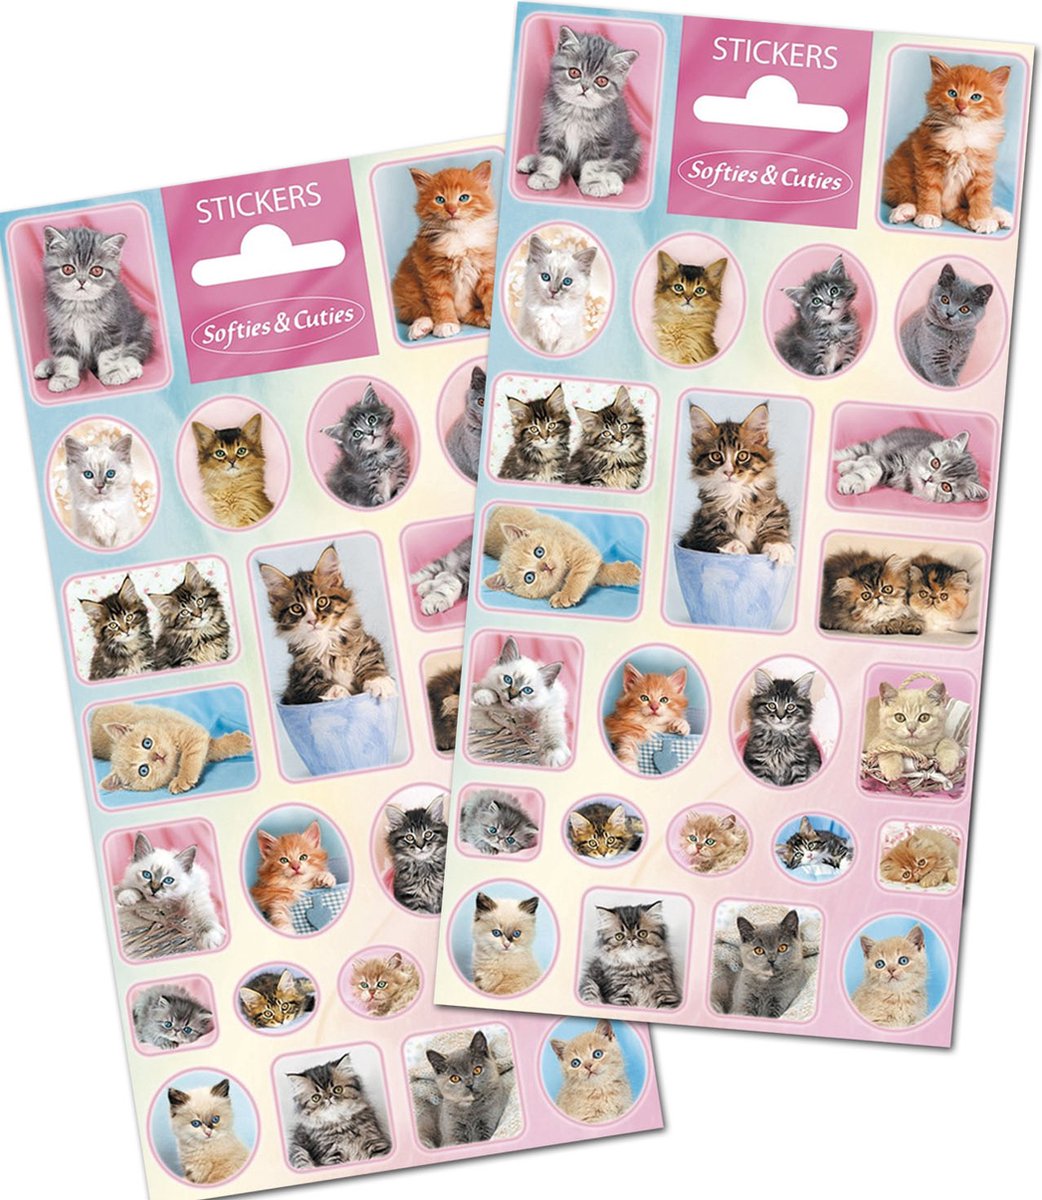 Stickervellen Kittens - Stickers Katten - Lieve Katjes Stickervellen - Stickervellen - Stickers Huisdieren - Dieren Stickers - Knutselen Meisjes - Knutselen Jongens - Beloningsstickers - Kat - Stickers Kleuters - Kitten - Kittens